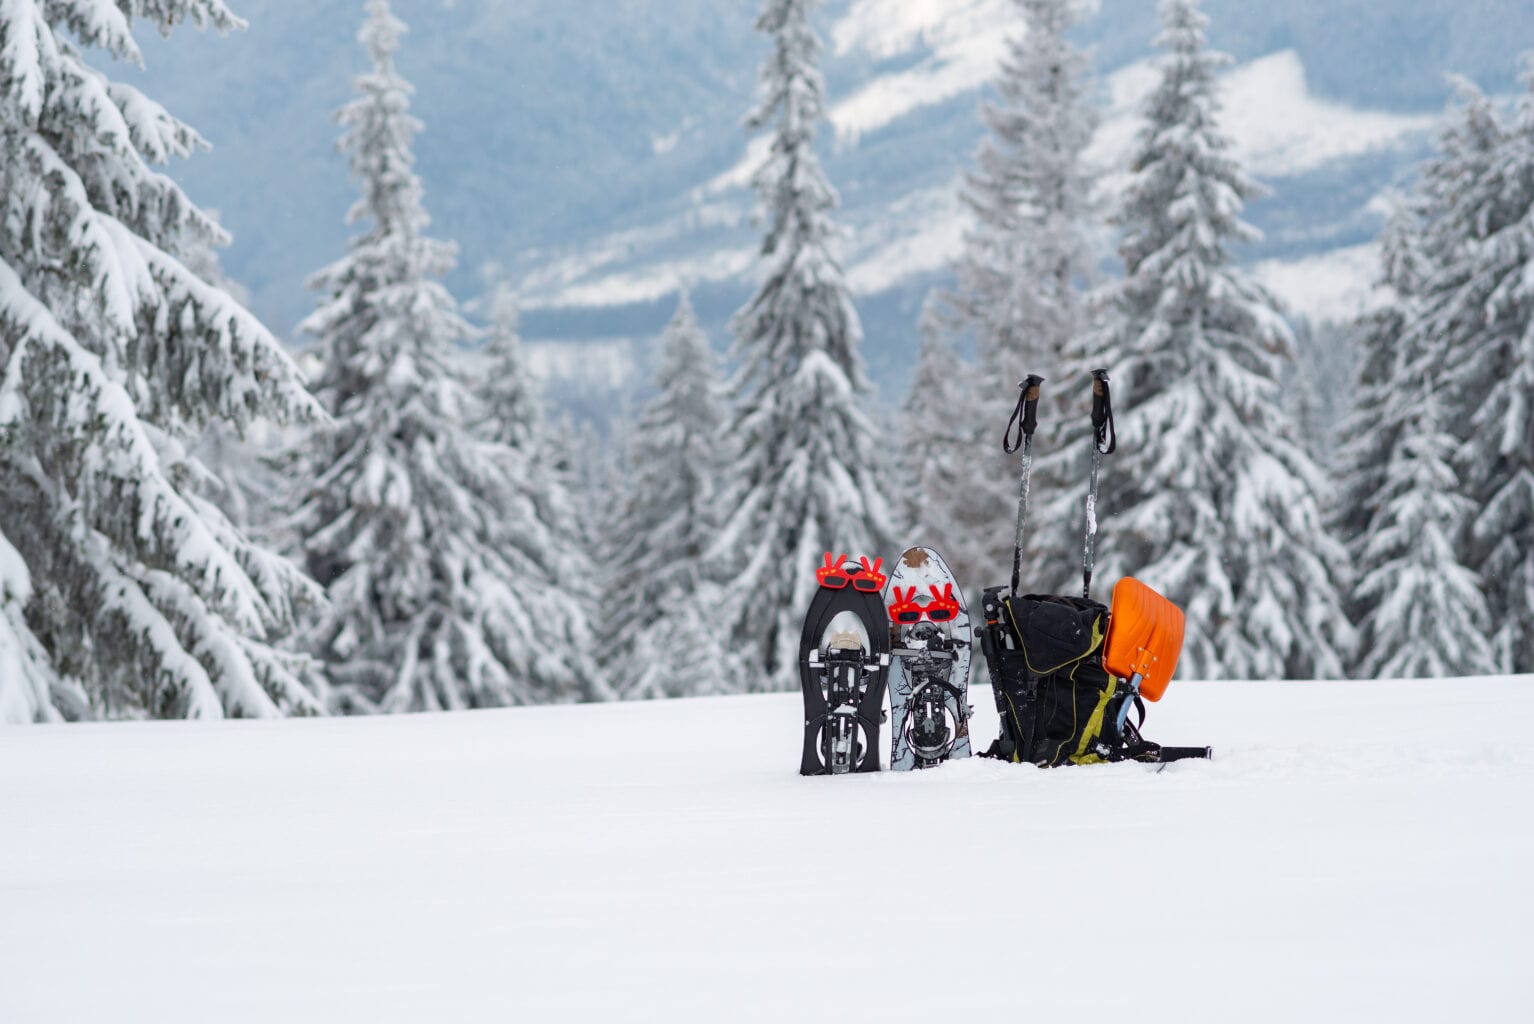 Avalanche Safety Guide - Avalanche & Ski Equipment in Snow Canada BC